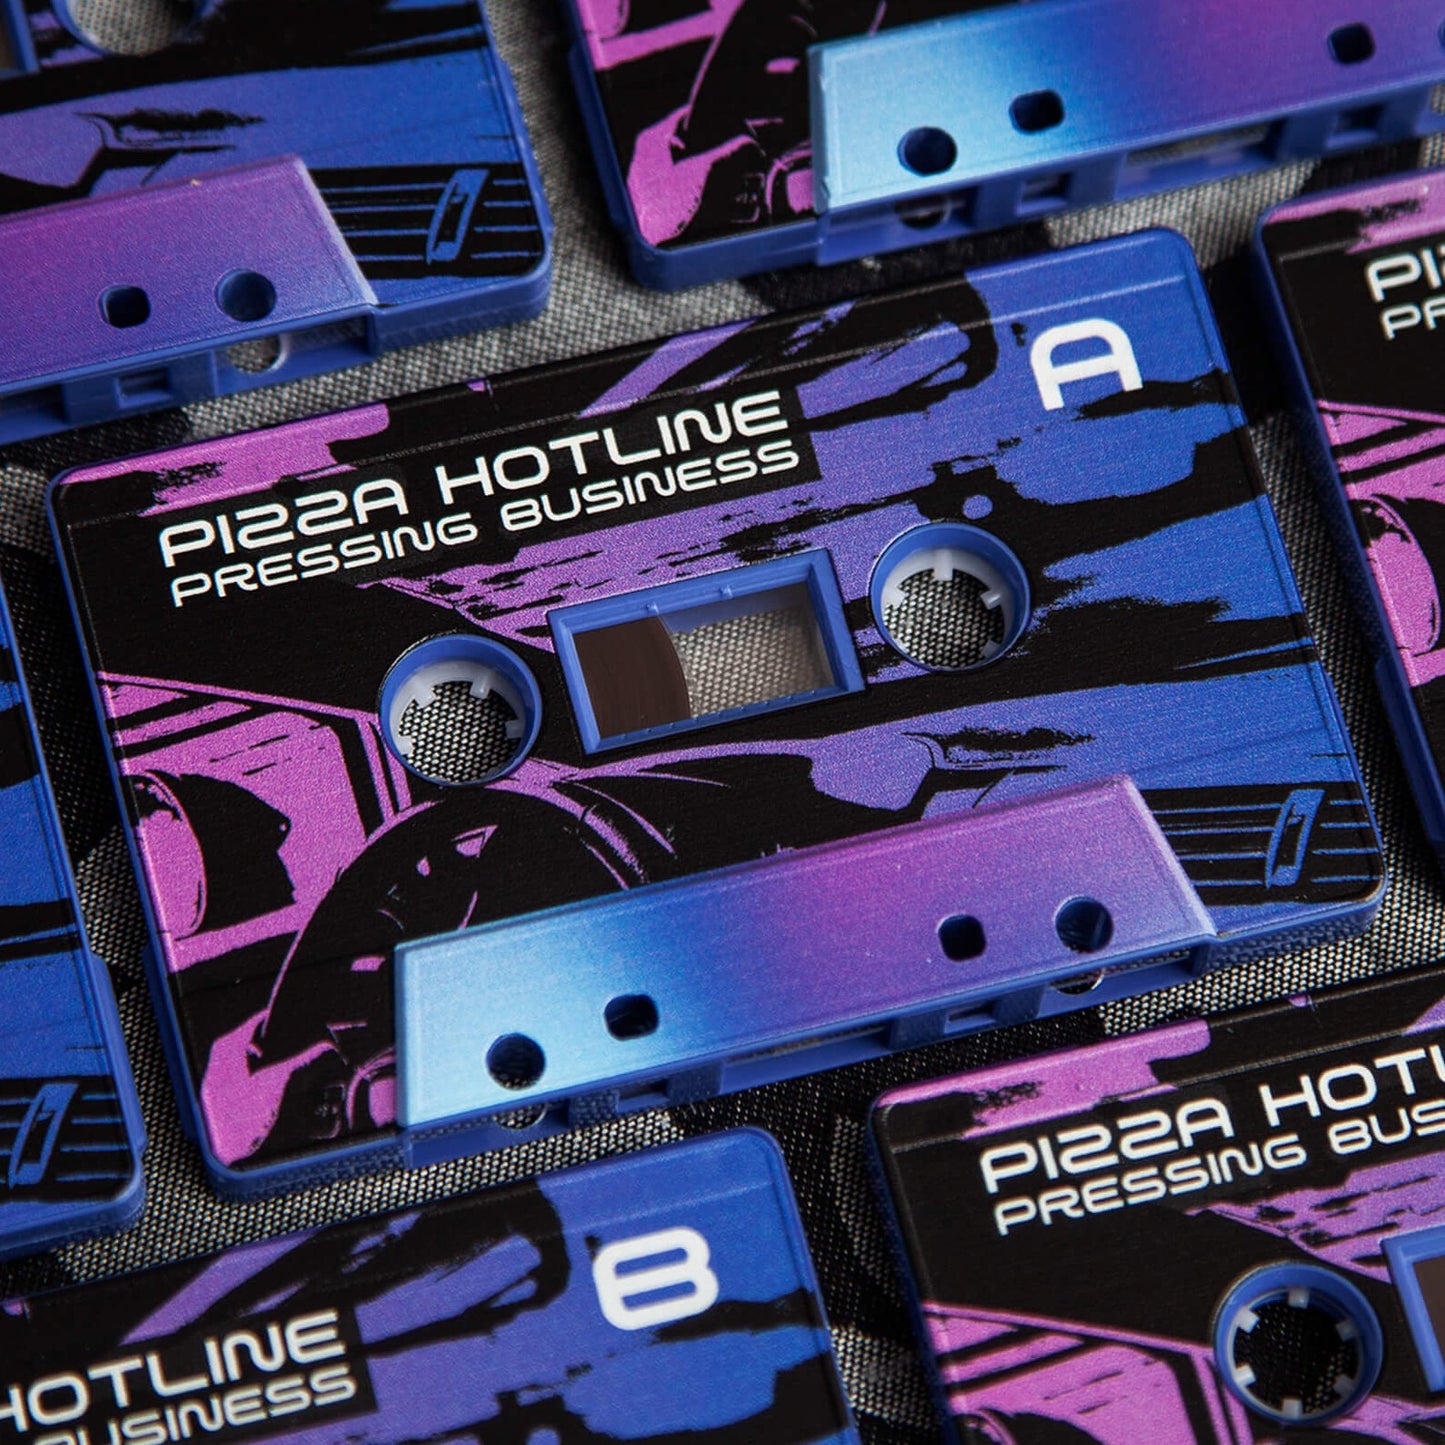 Pizza Hotline - Pressing Business cassette